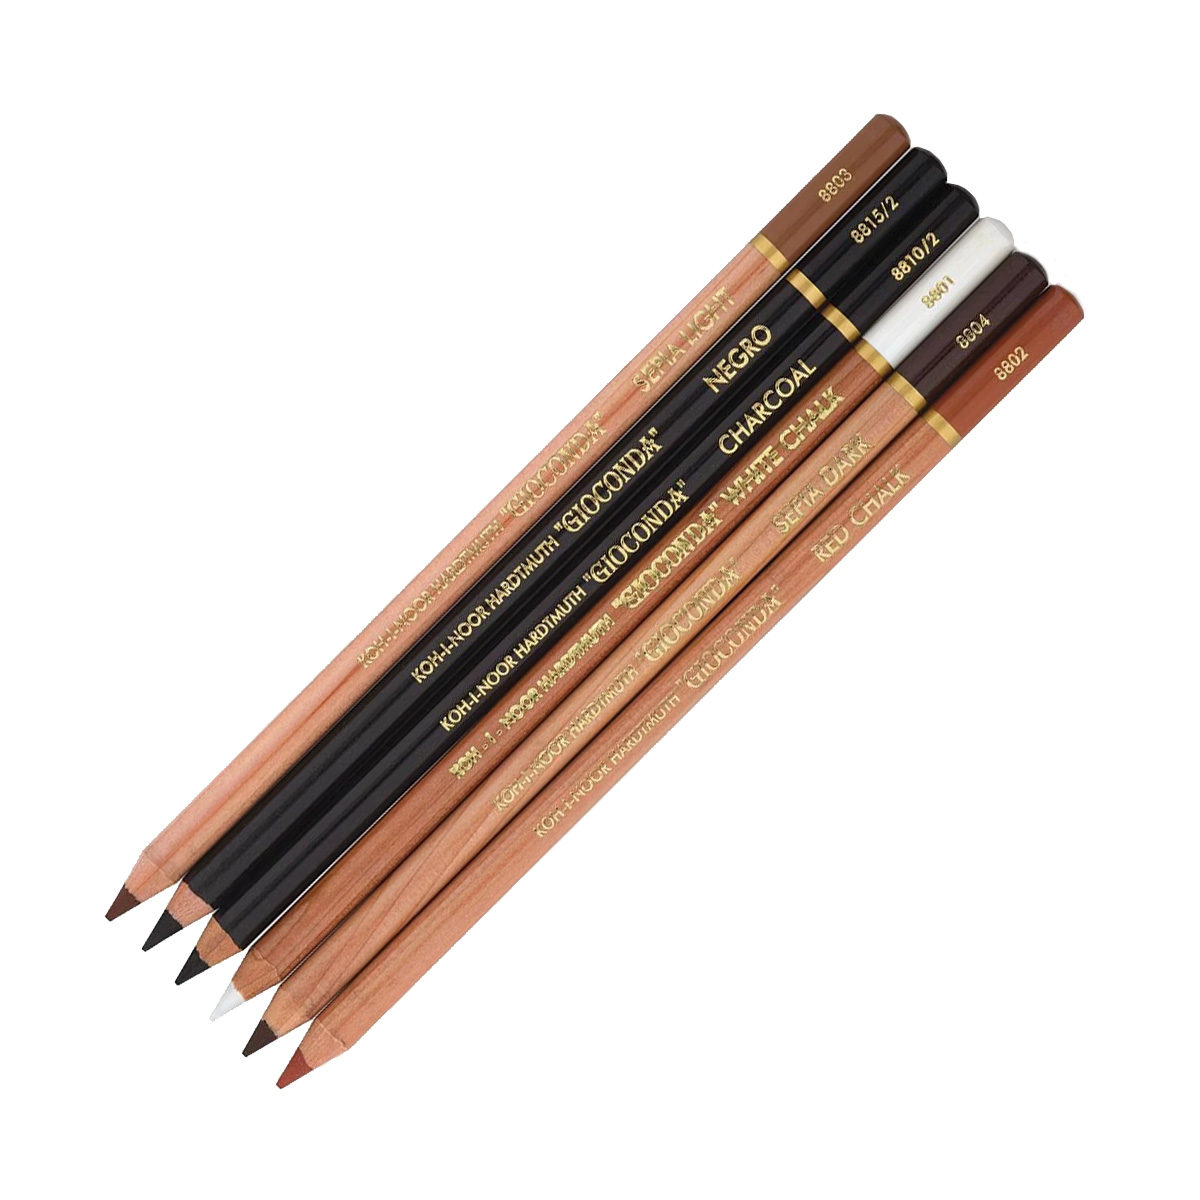 Gioconda Soft Pastel Pencils: Gioconda 12